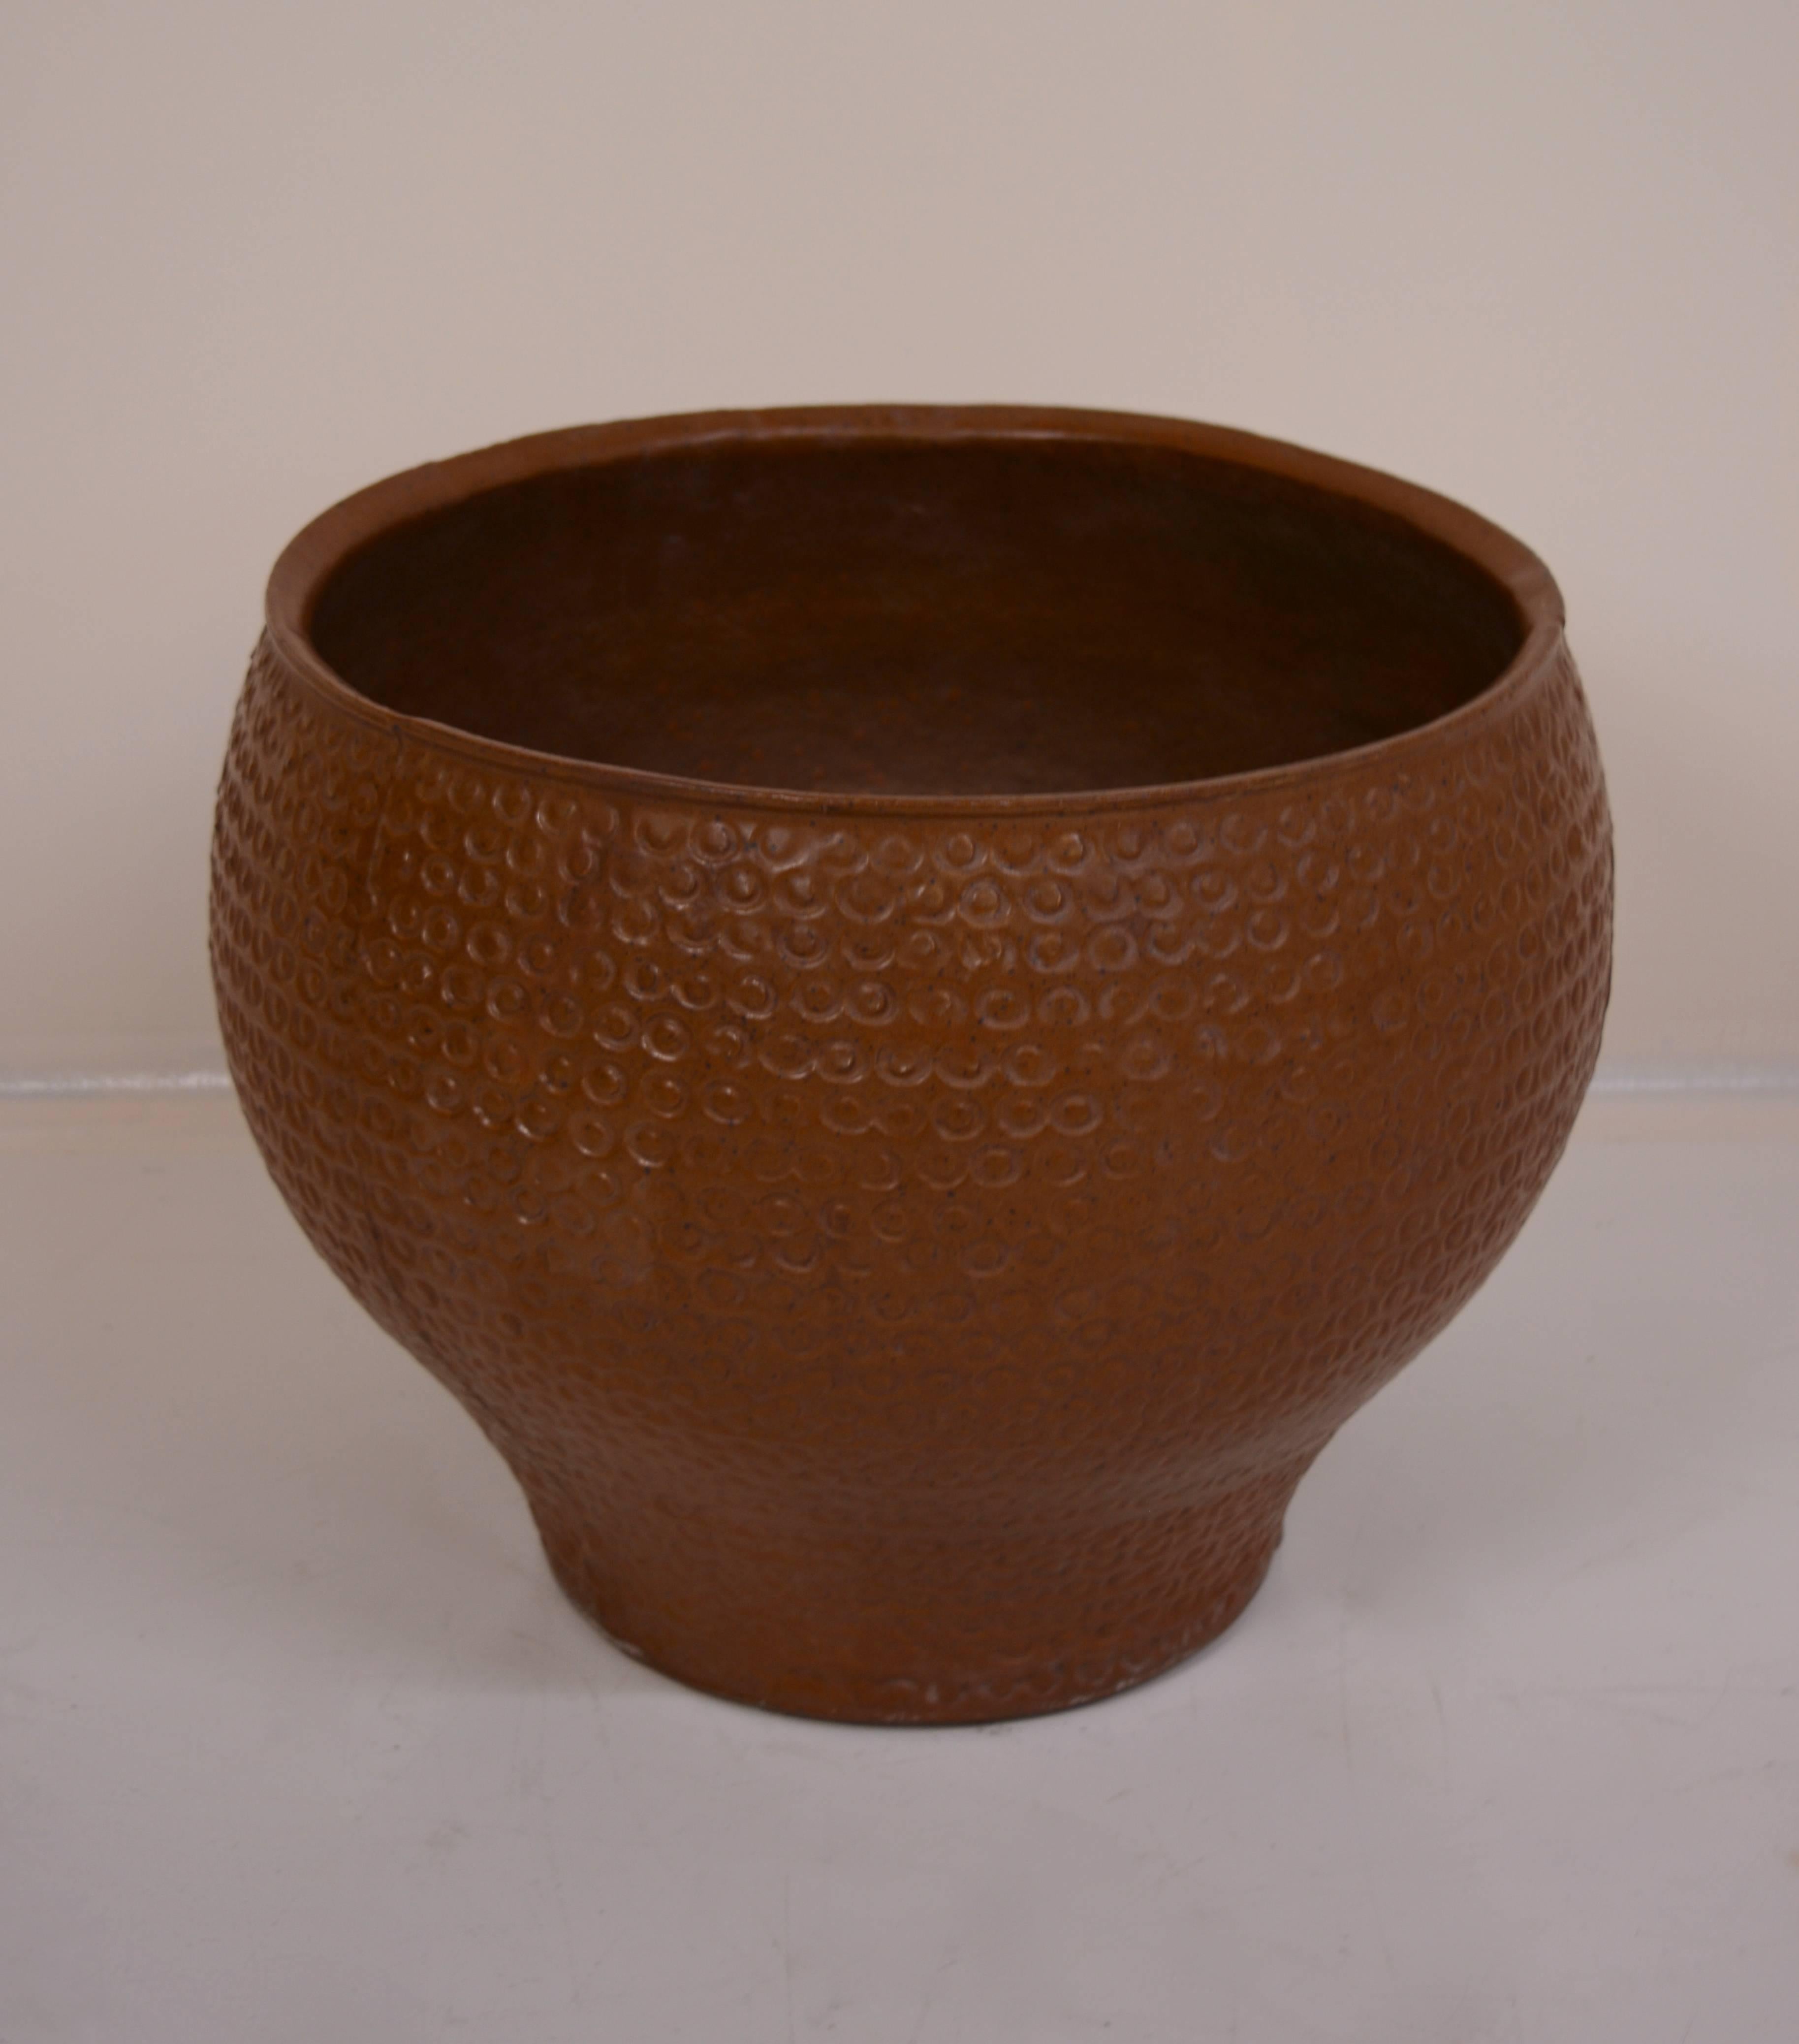 david cressey pottery